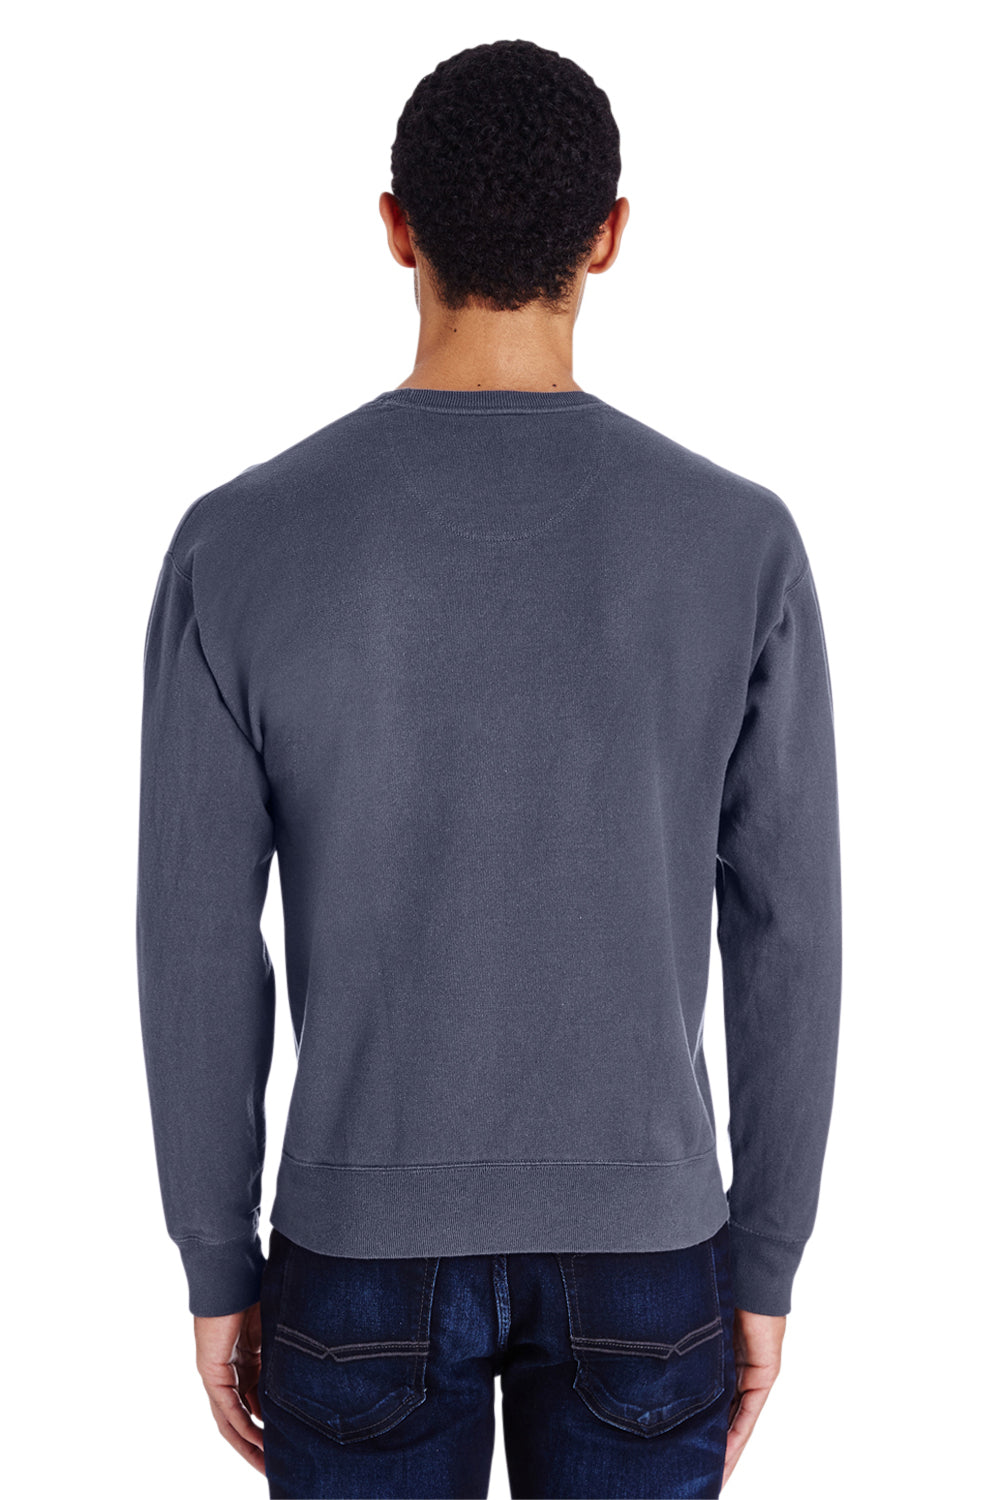 ComfortWash By Hanes GDH400 Mens Crewneck Sweatshirt Slate Blue Back